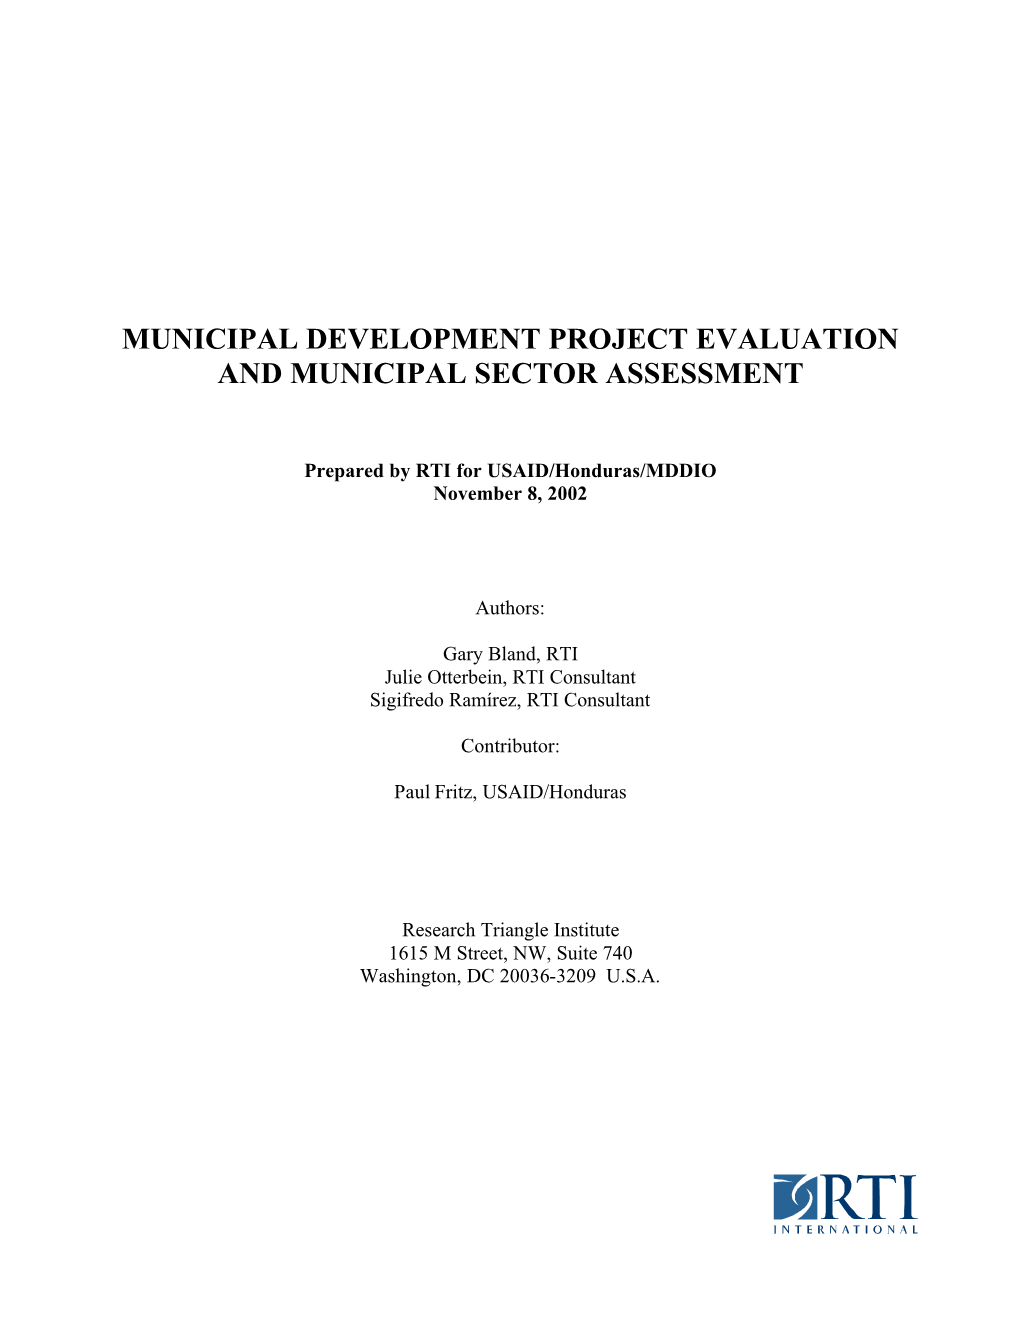 Municipal Development Project Evaluation and Municipal Sector Assessment